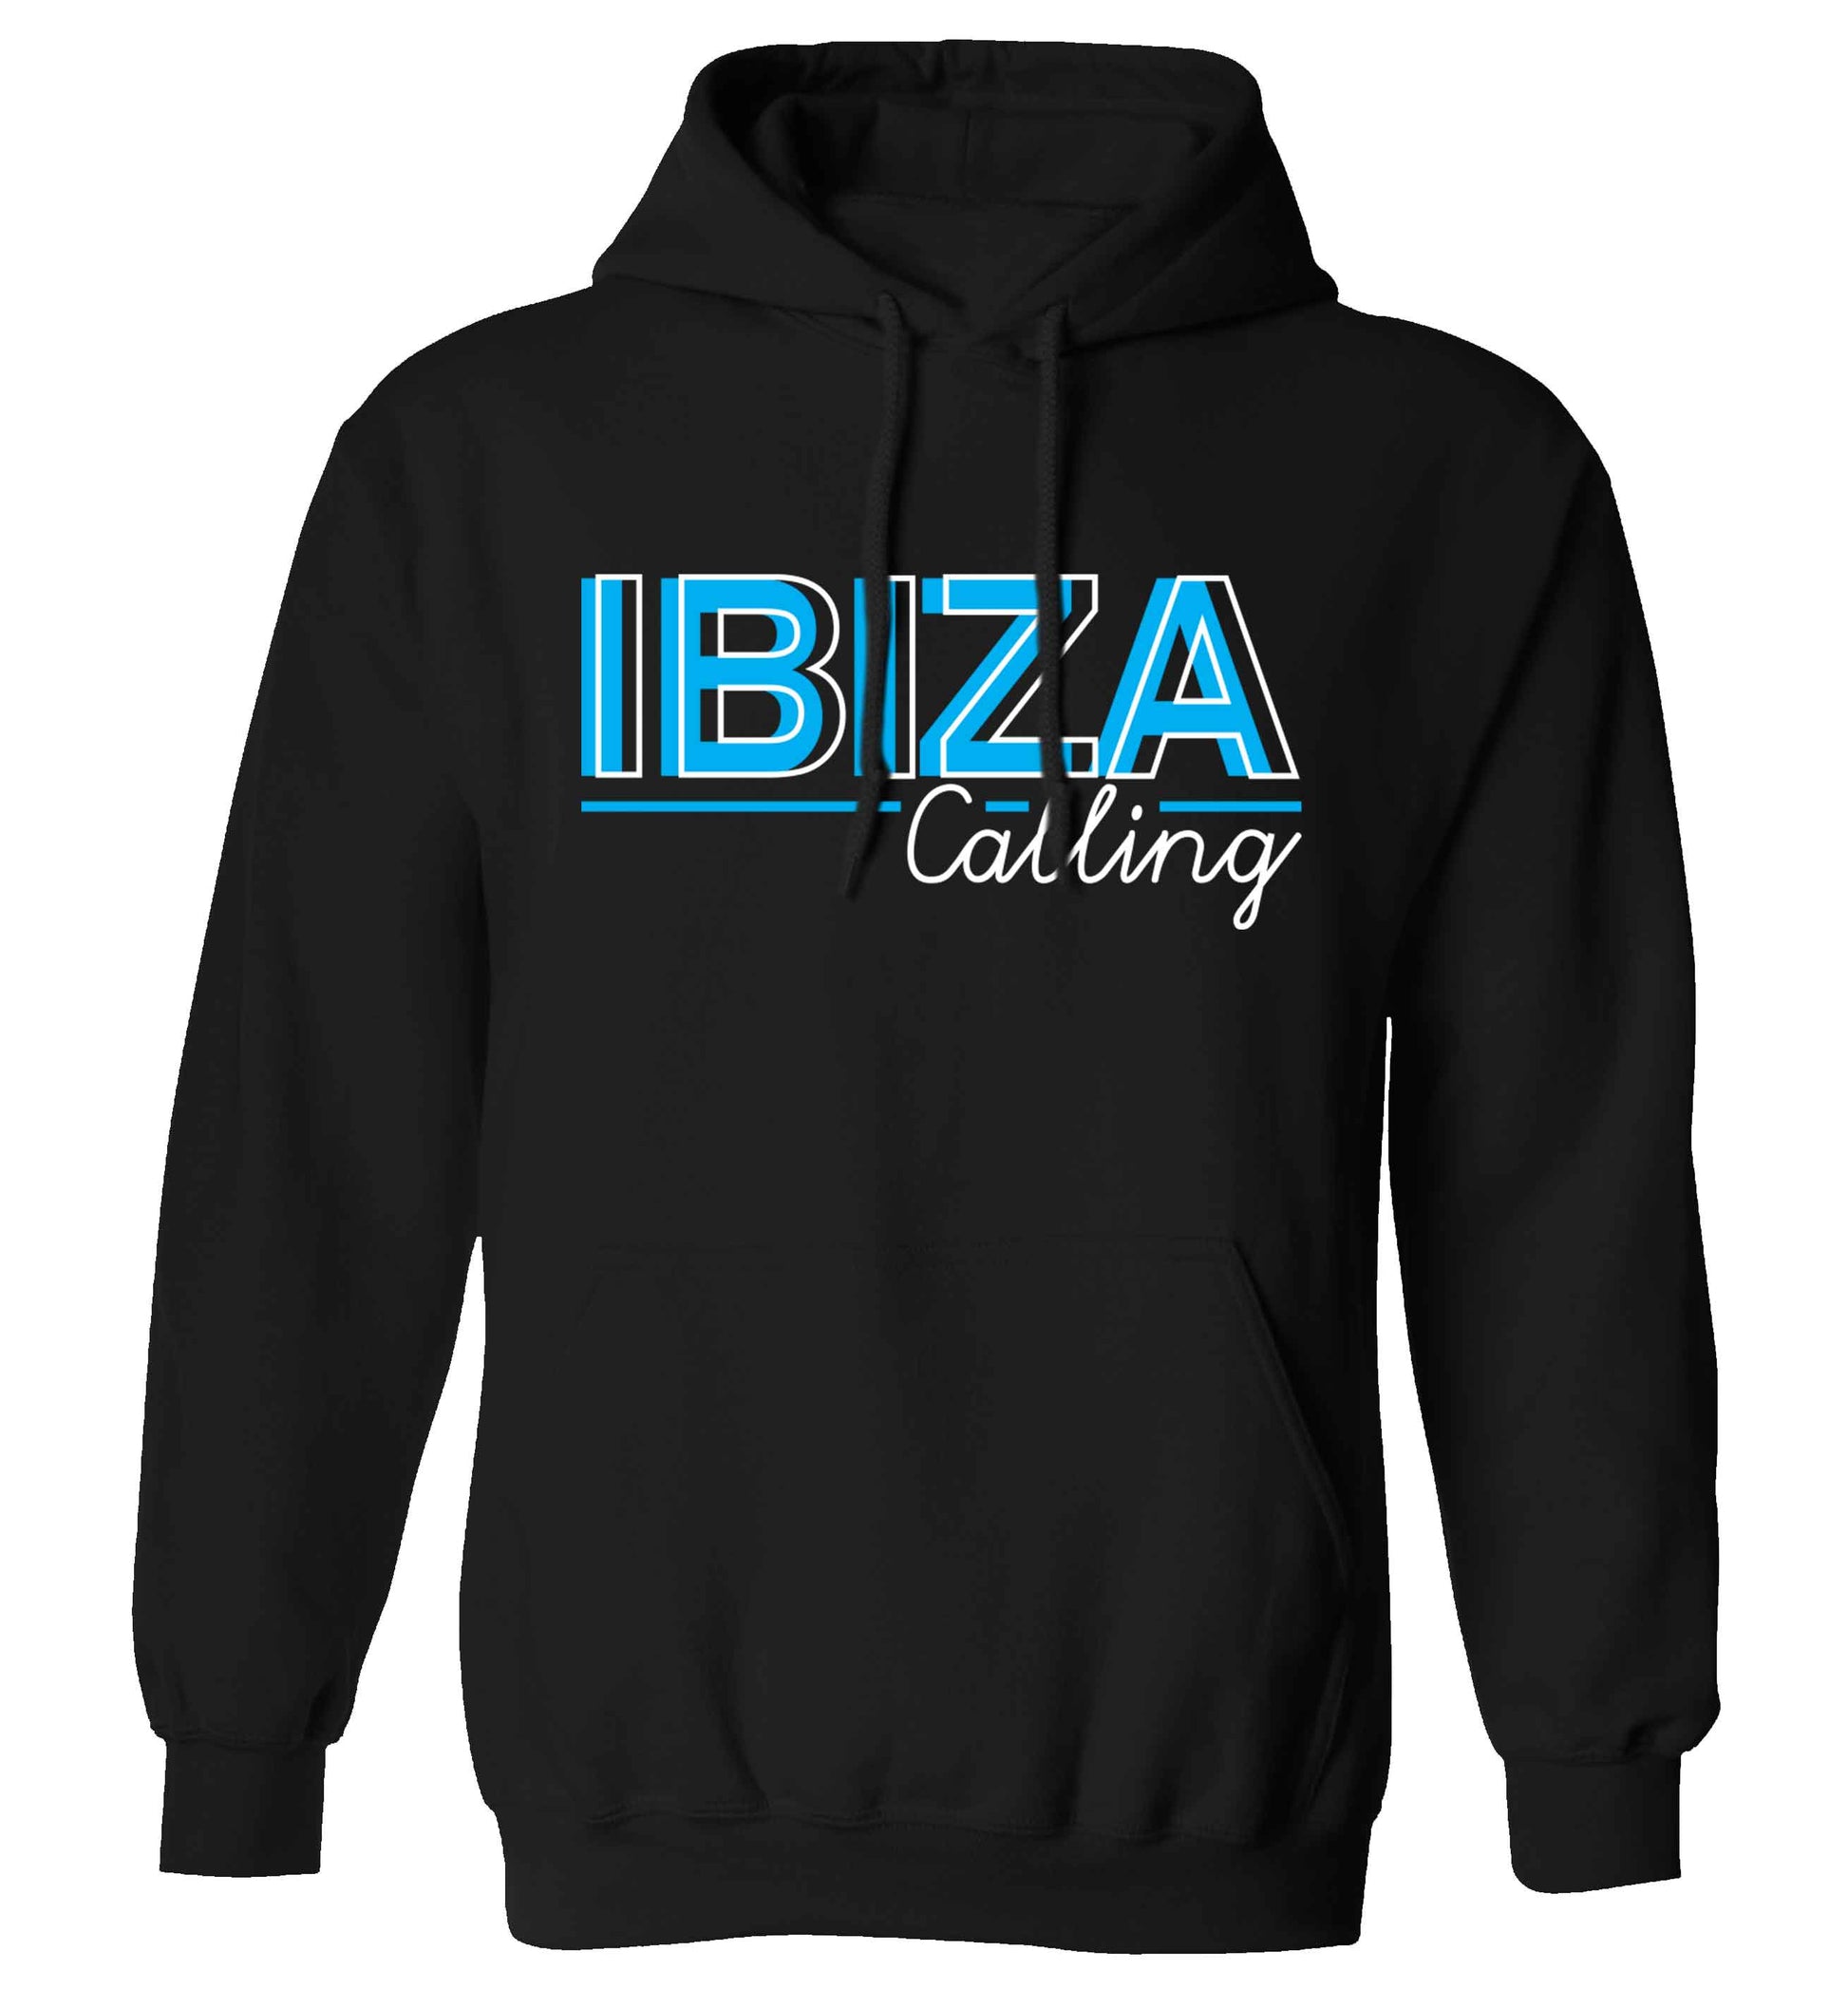 Ibiza calling adults unisex black hoodie 2XL